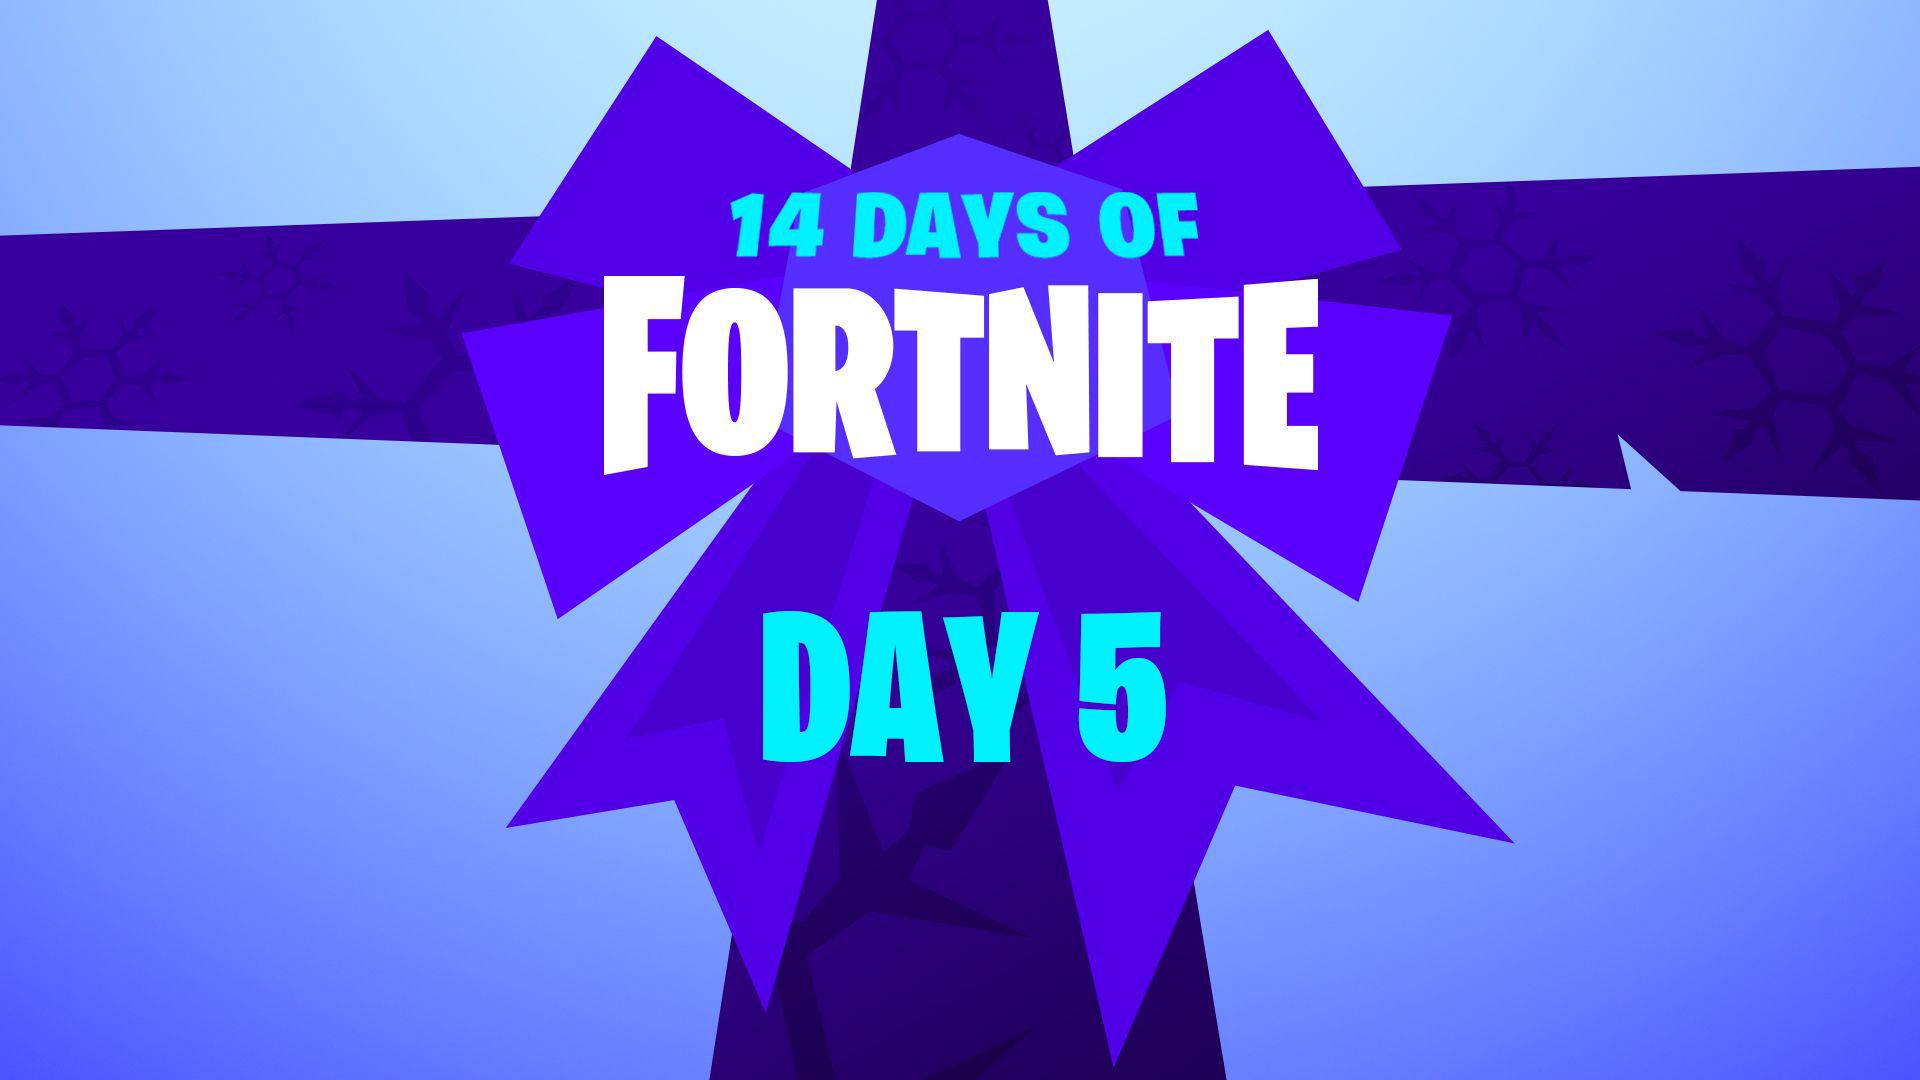 14 Days of Fortnite - Day 5 challenge & reward